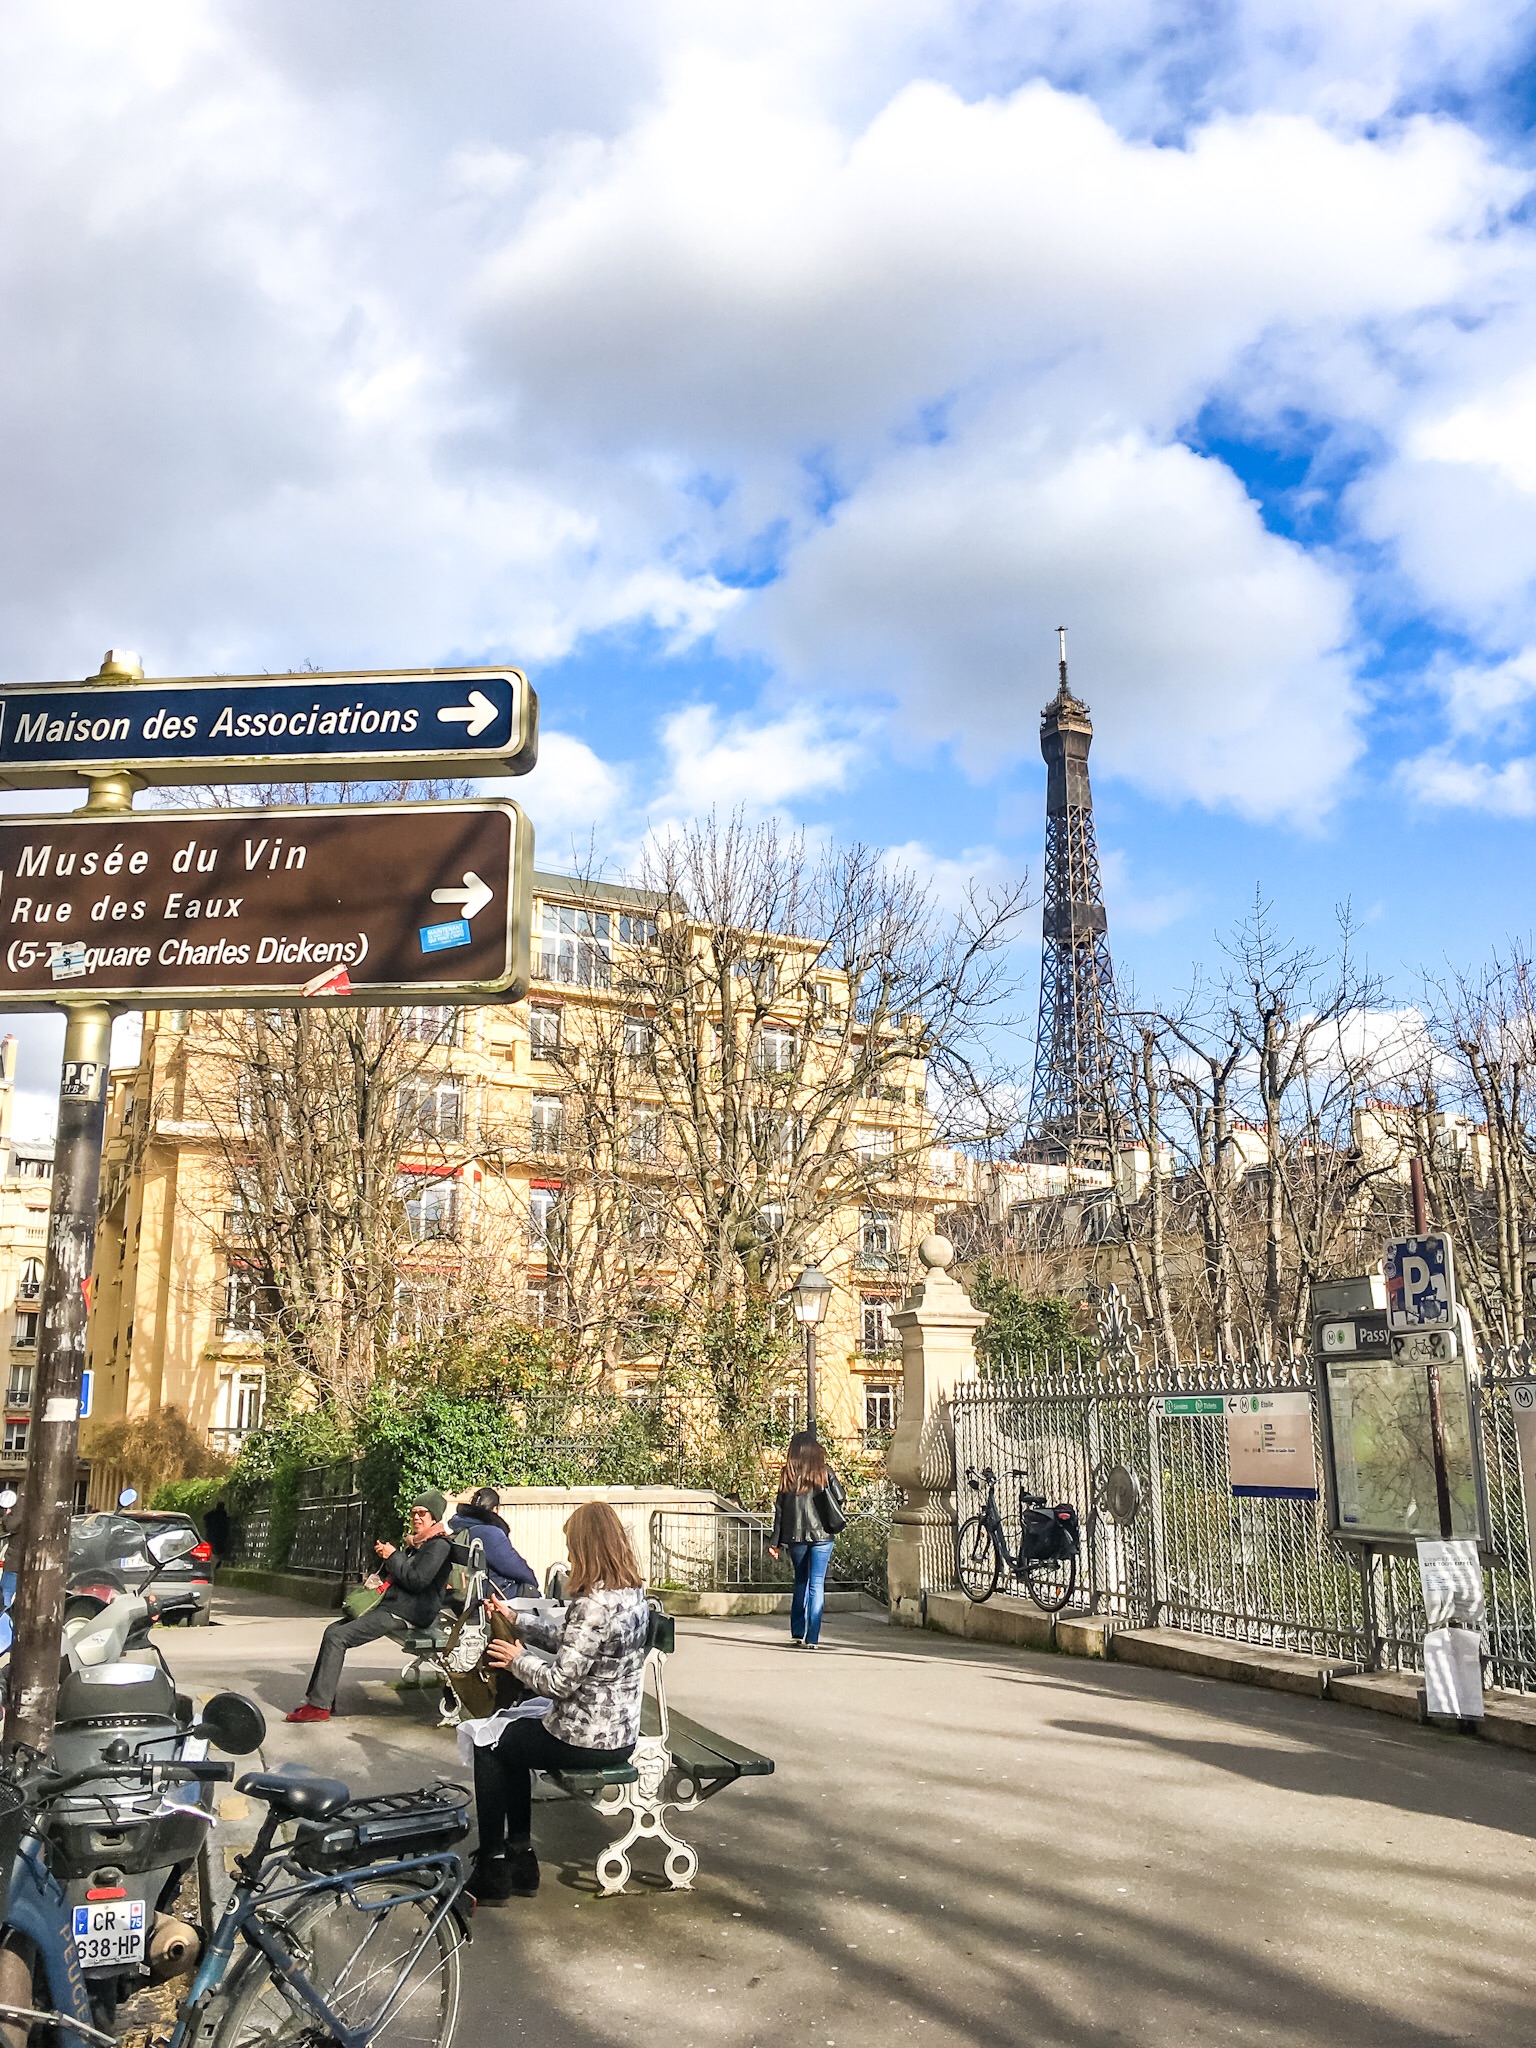 ZWIEDZAMY PARYZ HOW TO VISIT PARIS